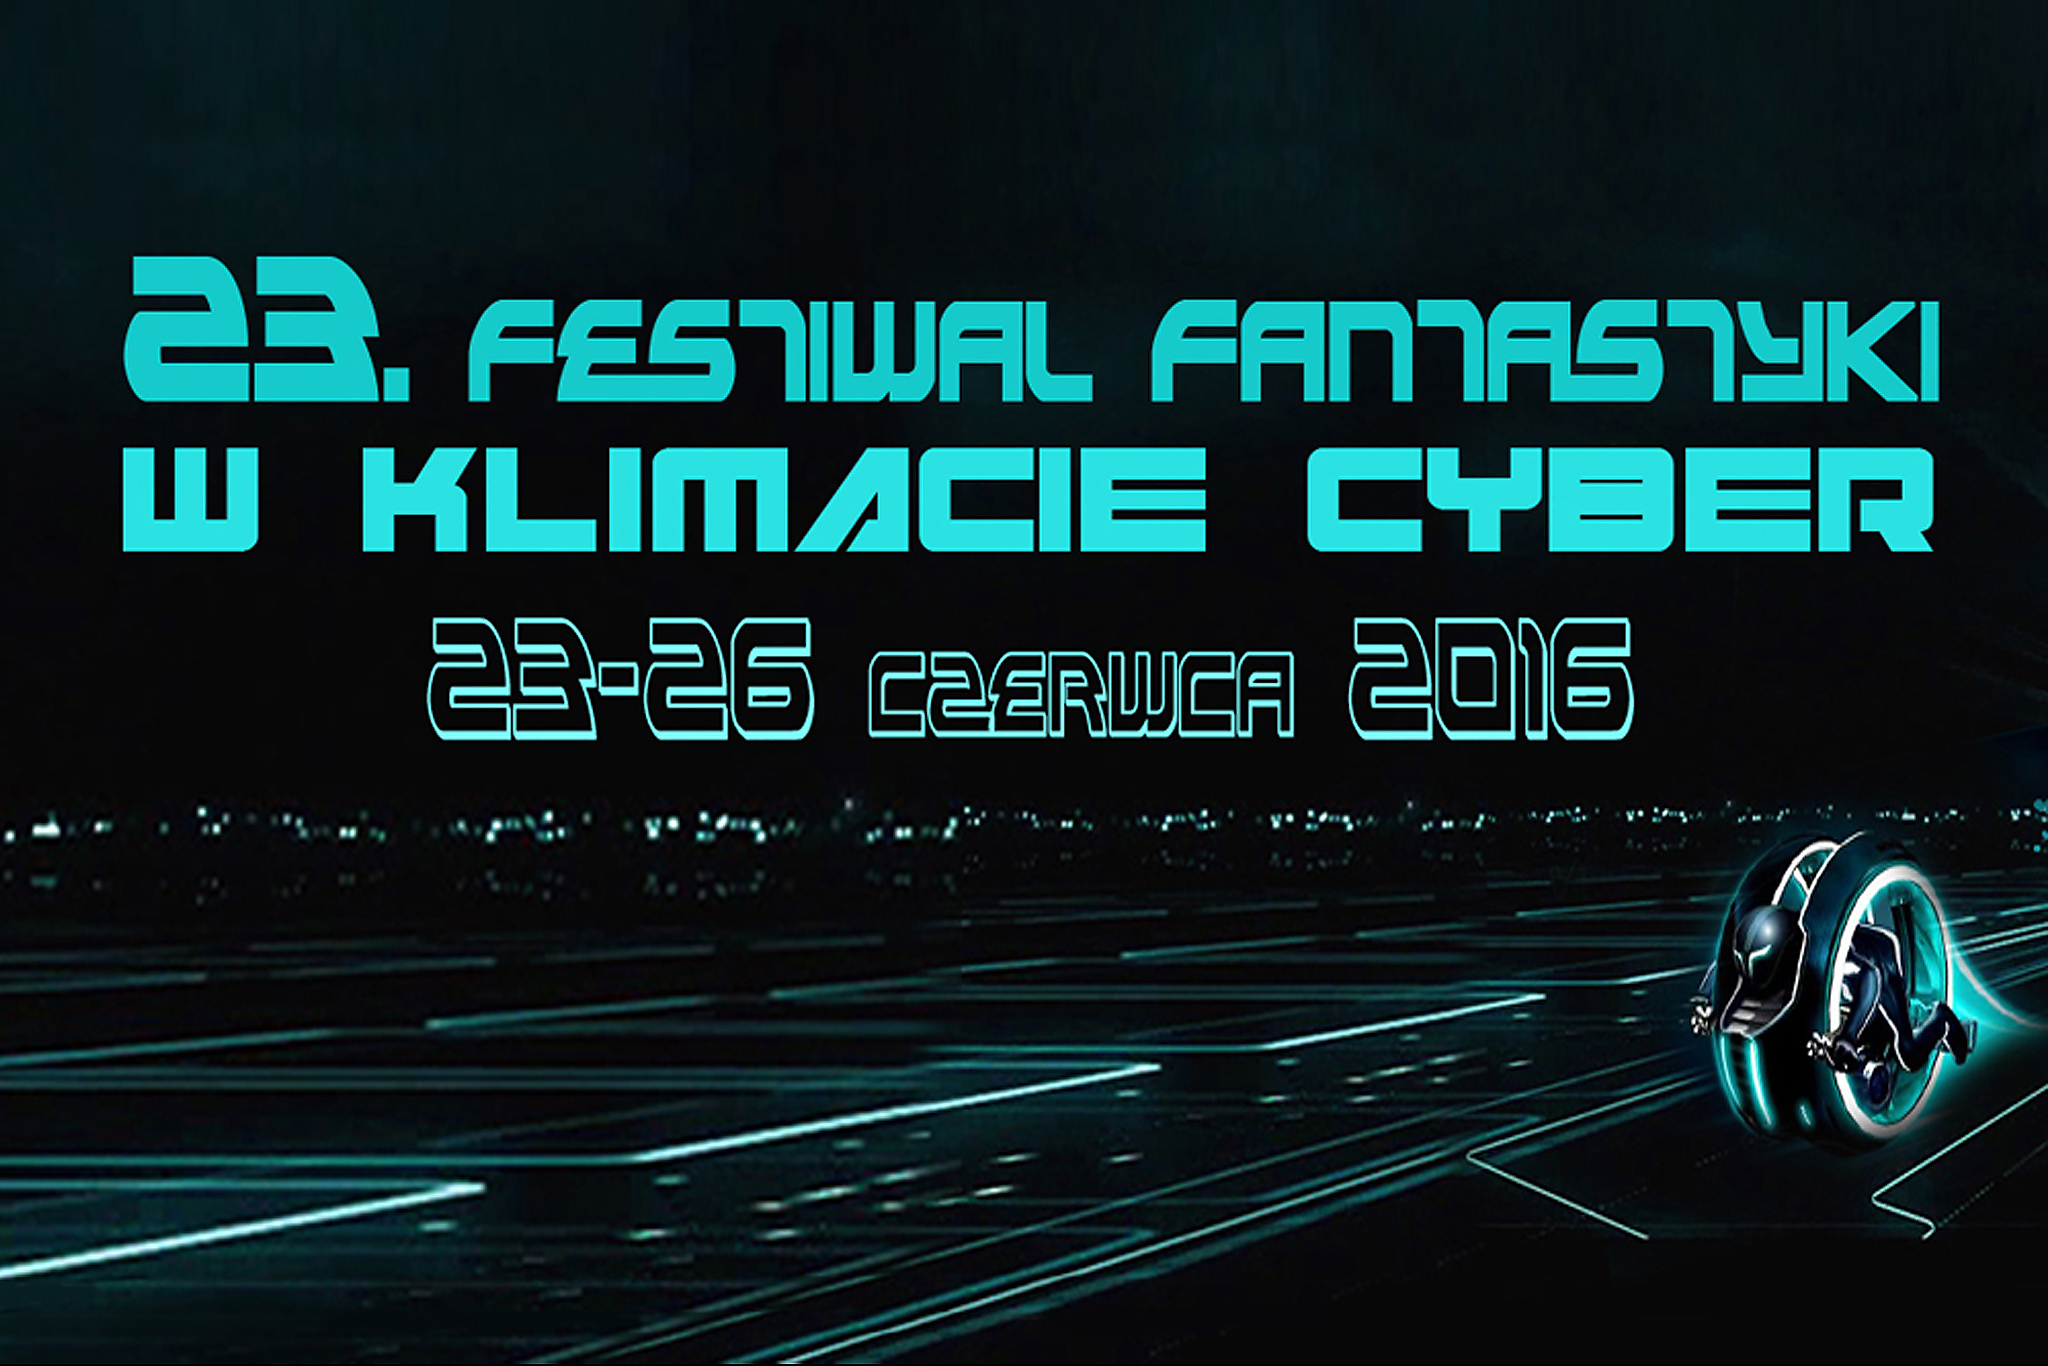 Festiwal Fantastyki Nidzica